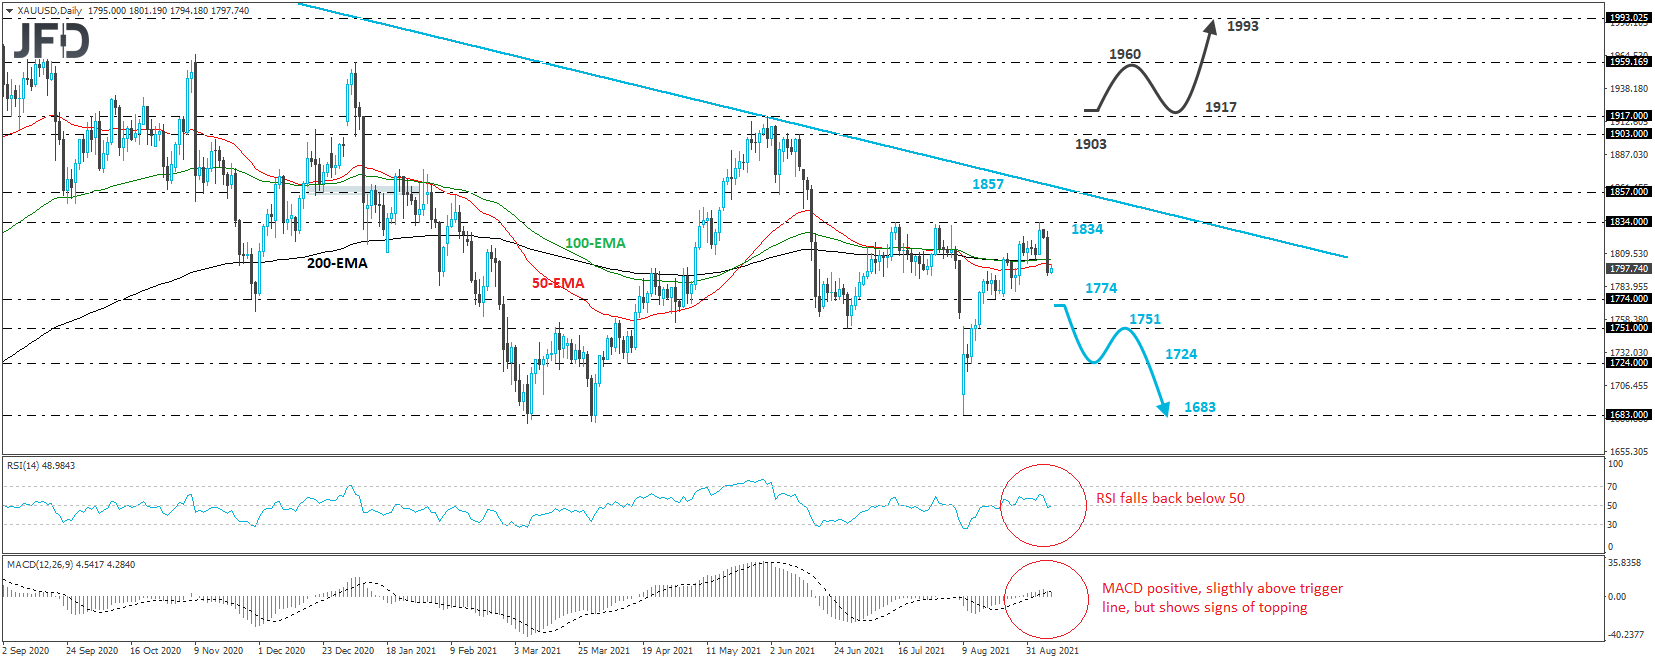 Gold XAU/USD daily chart technical analysis